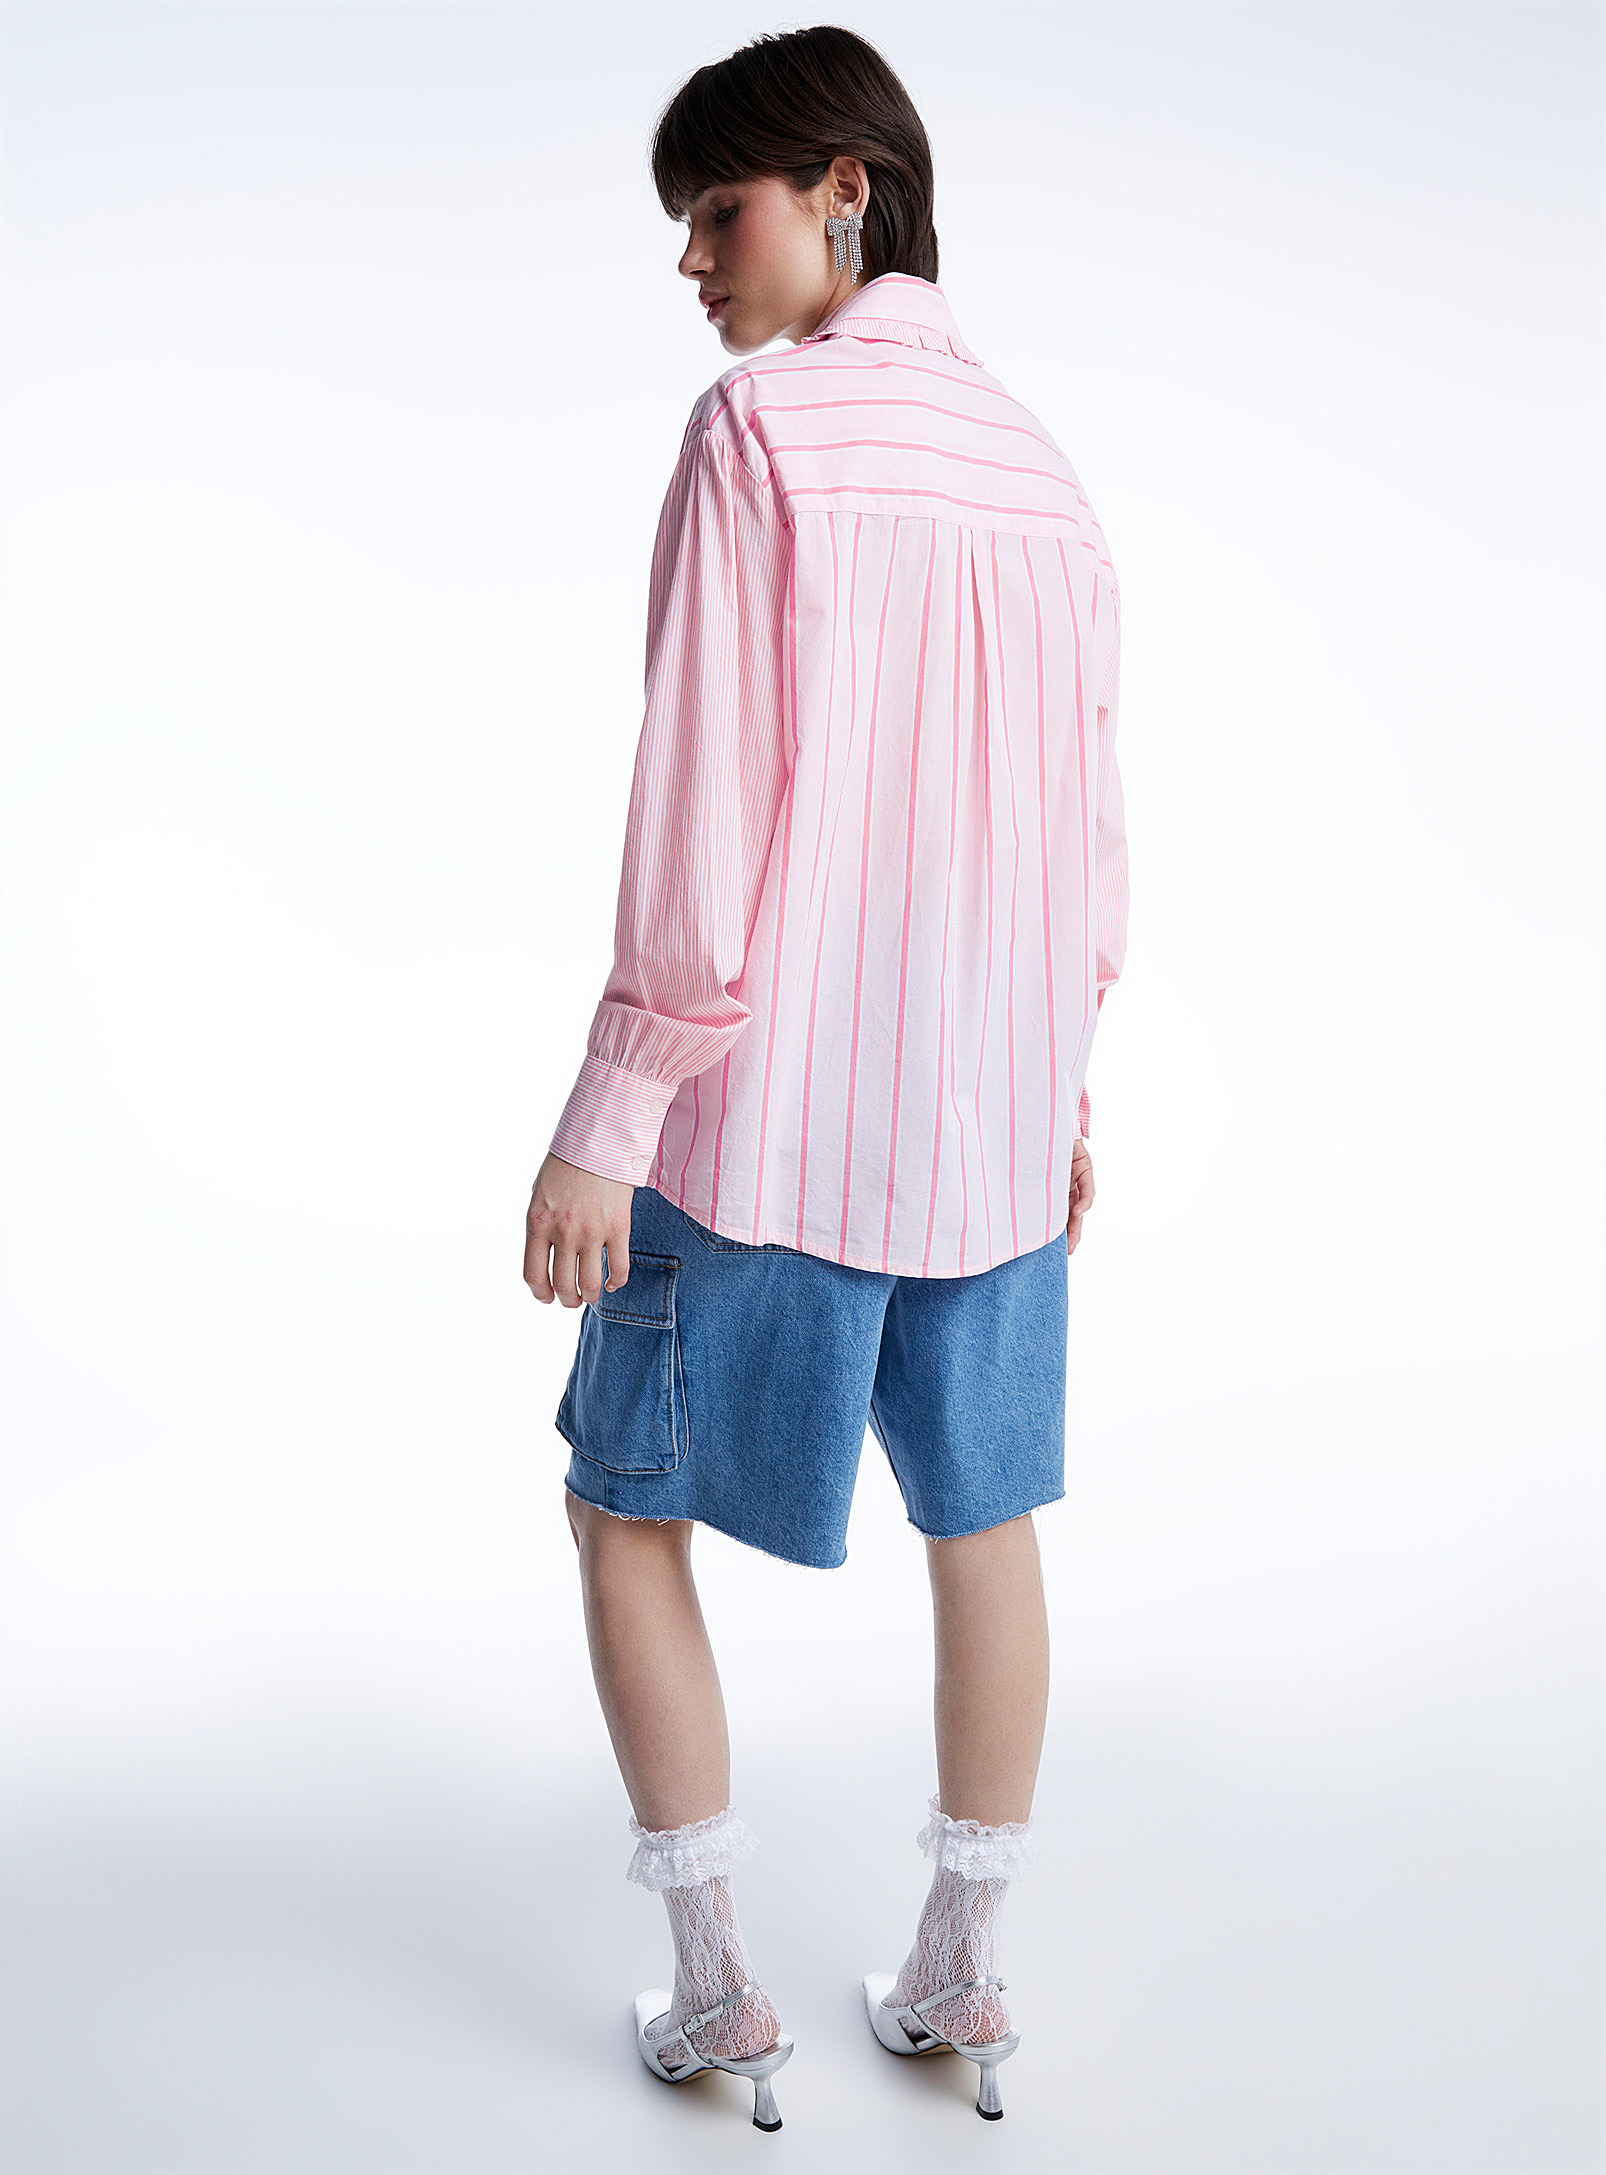 Damson Madder - La chemise rose rayures et frisons